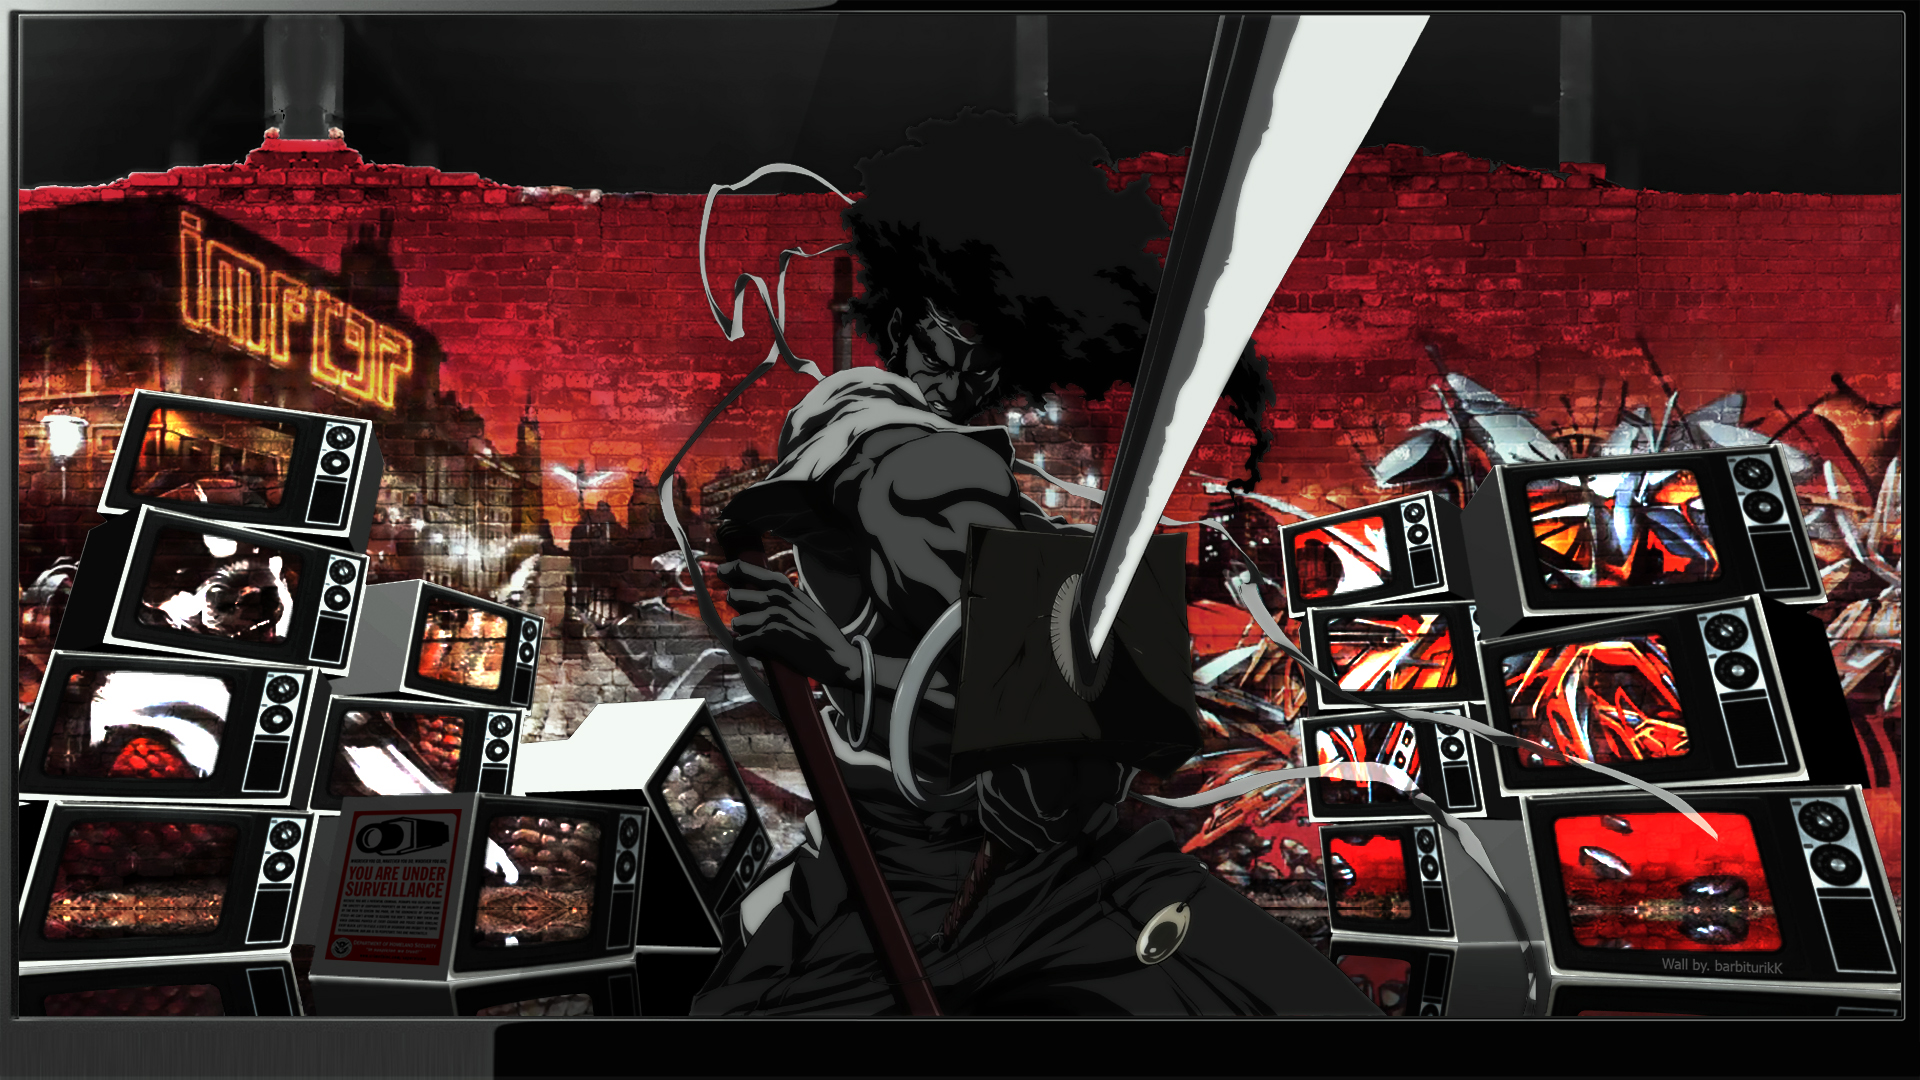 Afro samurai 1080P, 2K, 4K, 5K HD wallpapers free download